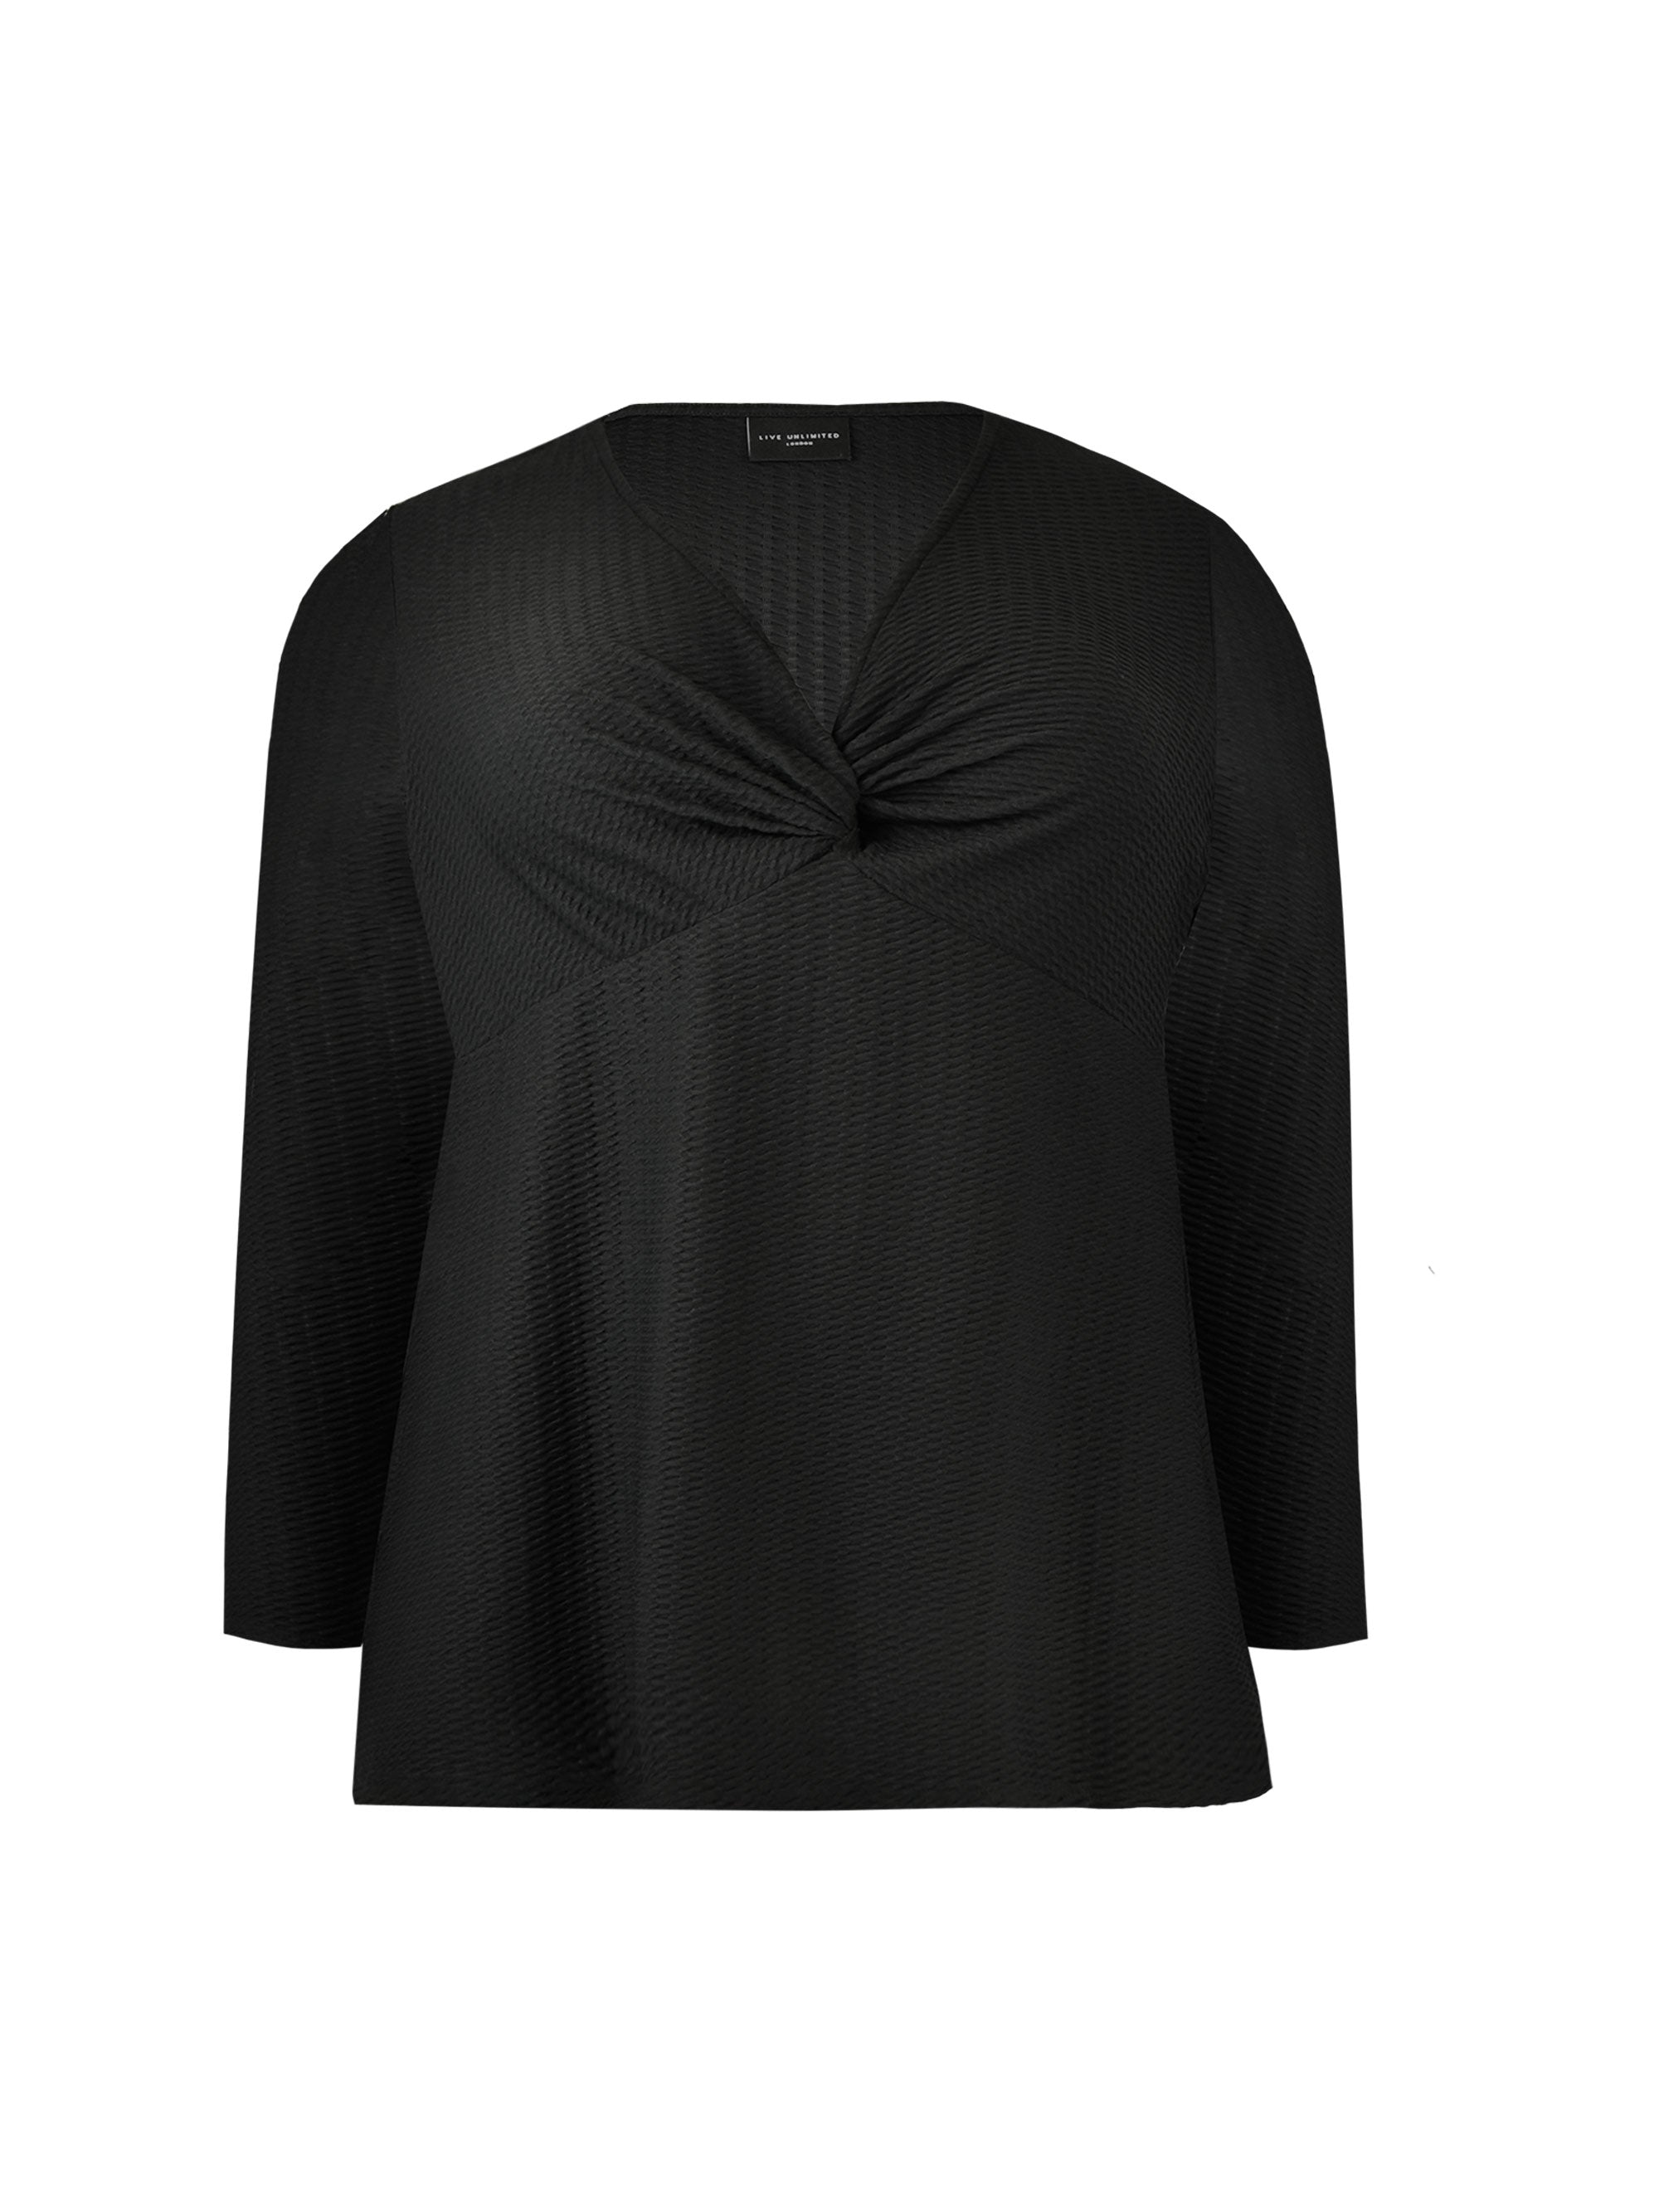 Black Textured Twist Front Jersey Top